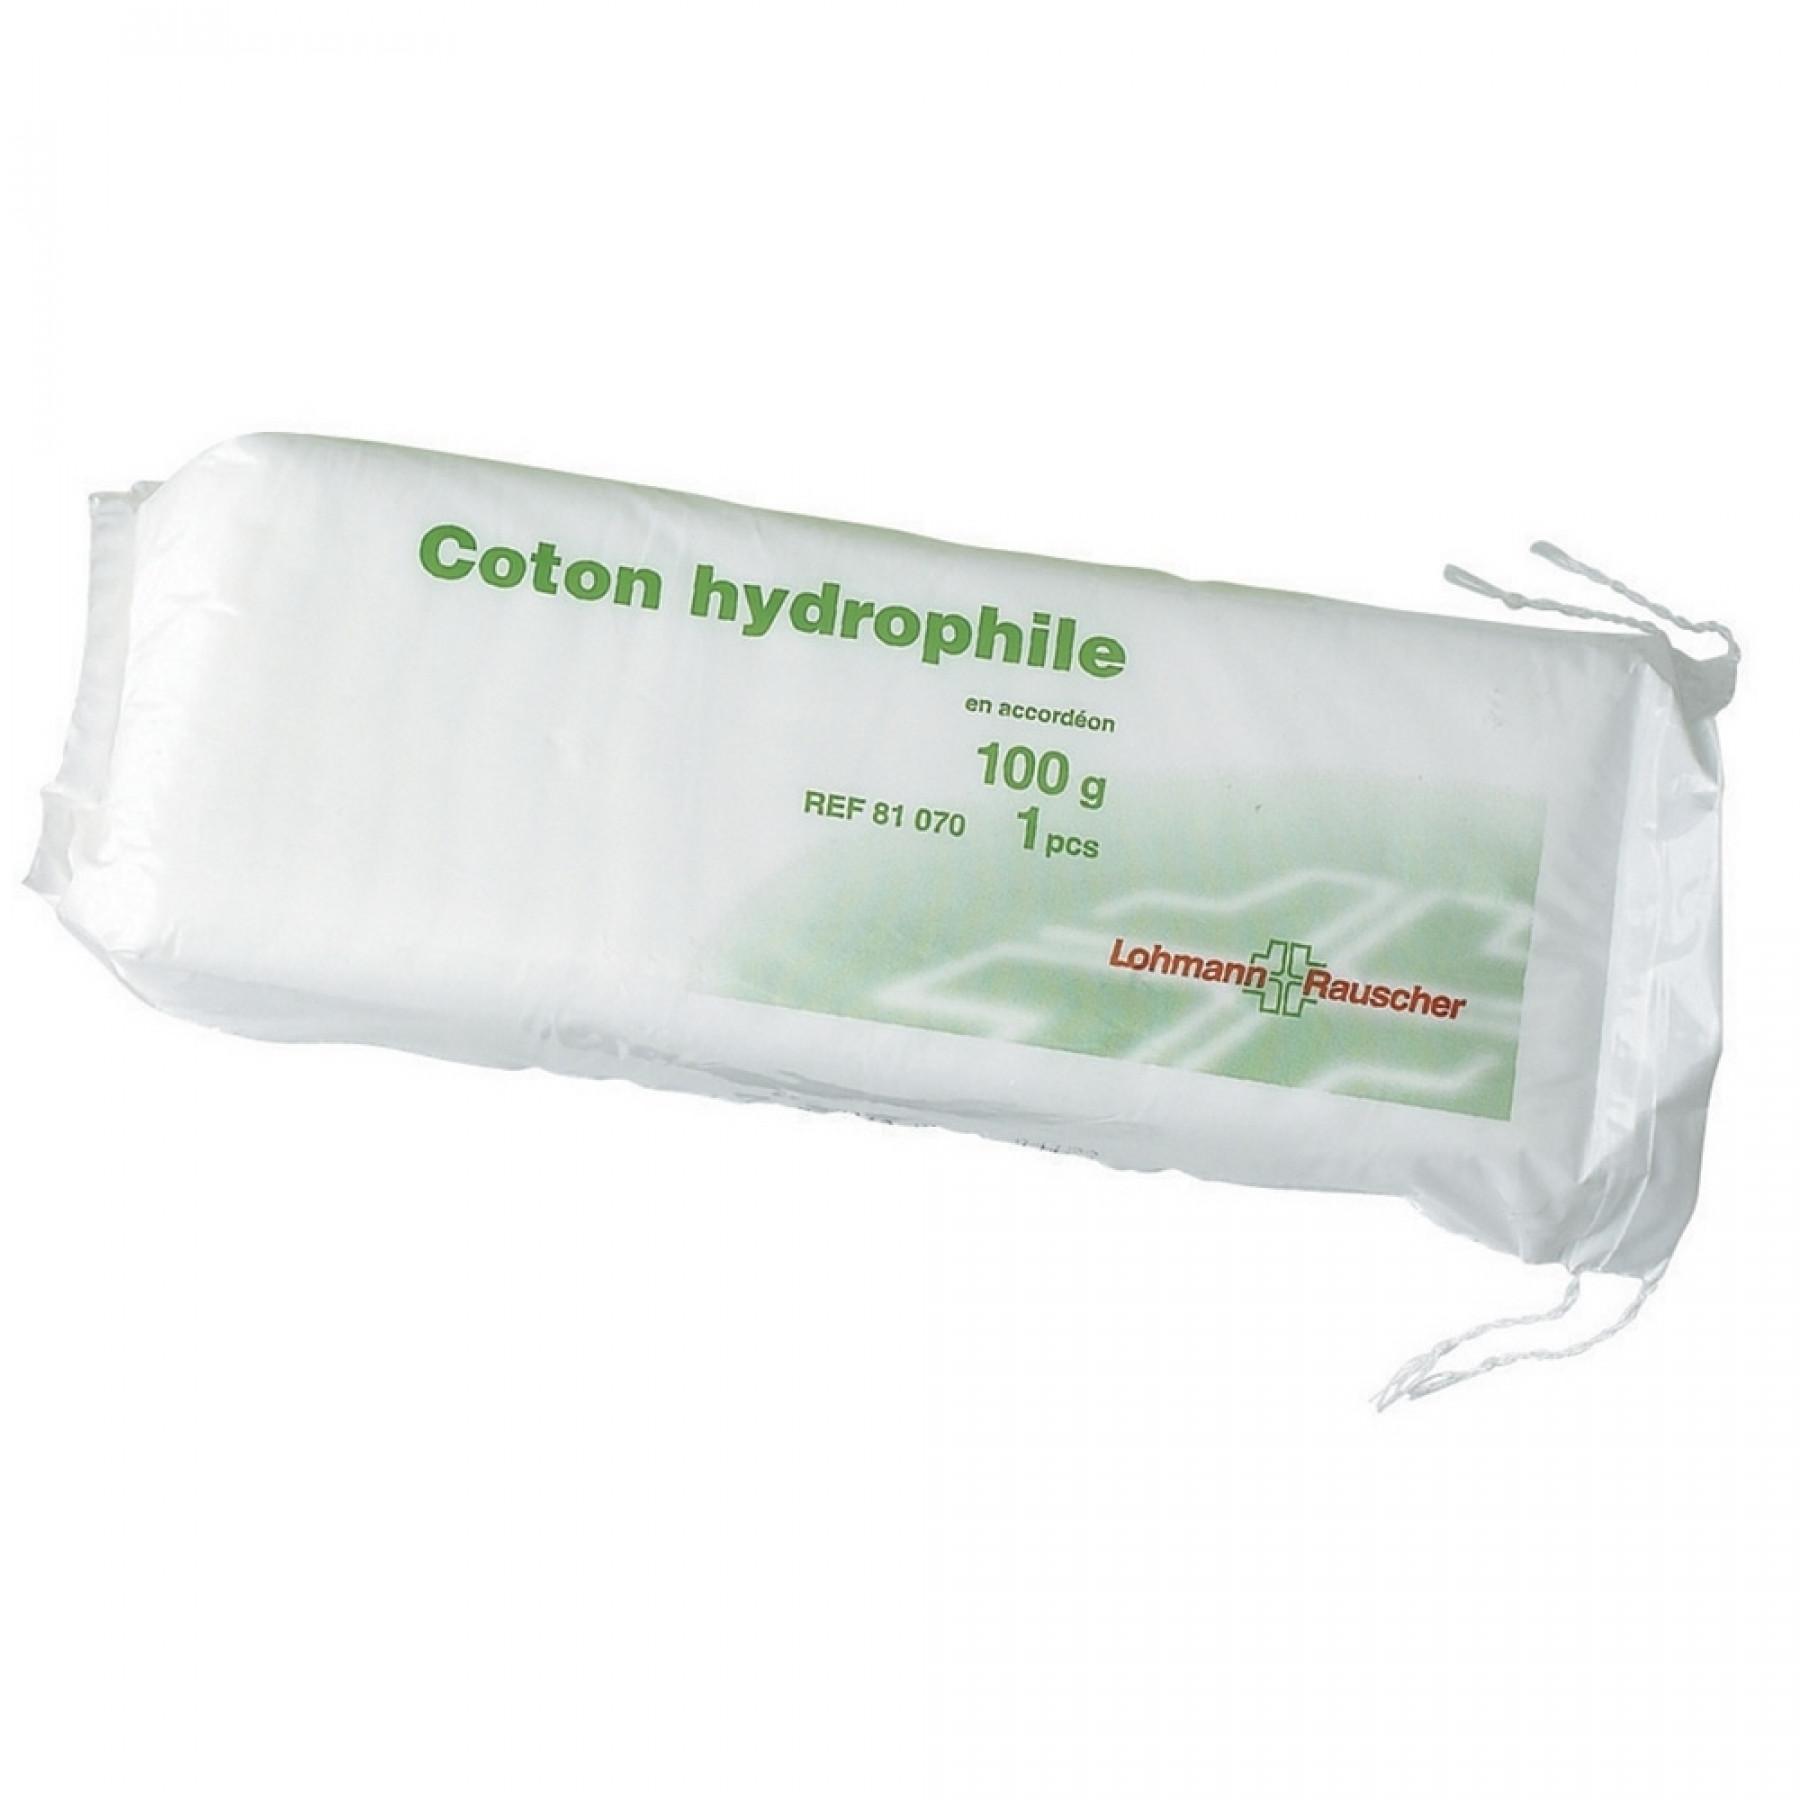 Hydrophilic cotton Tremblay